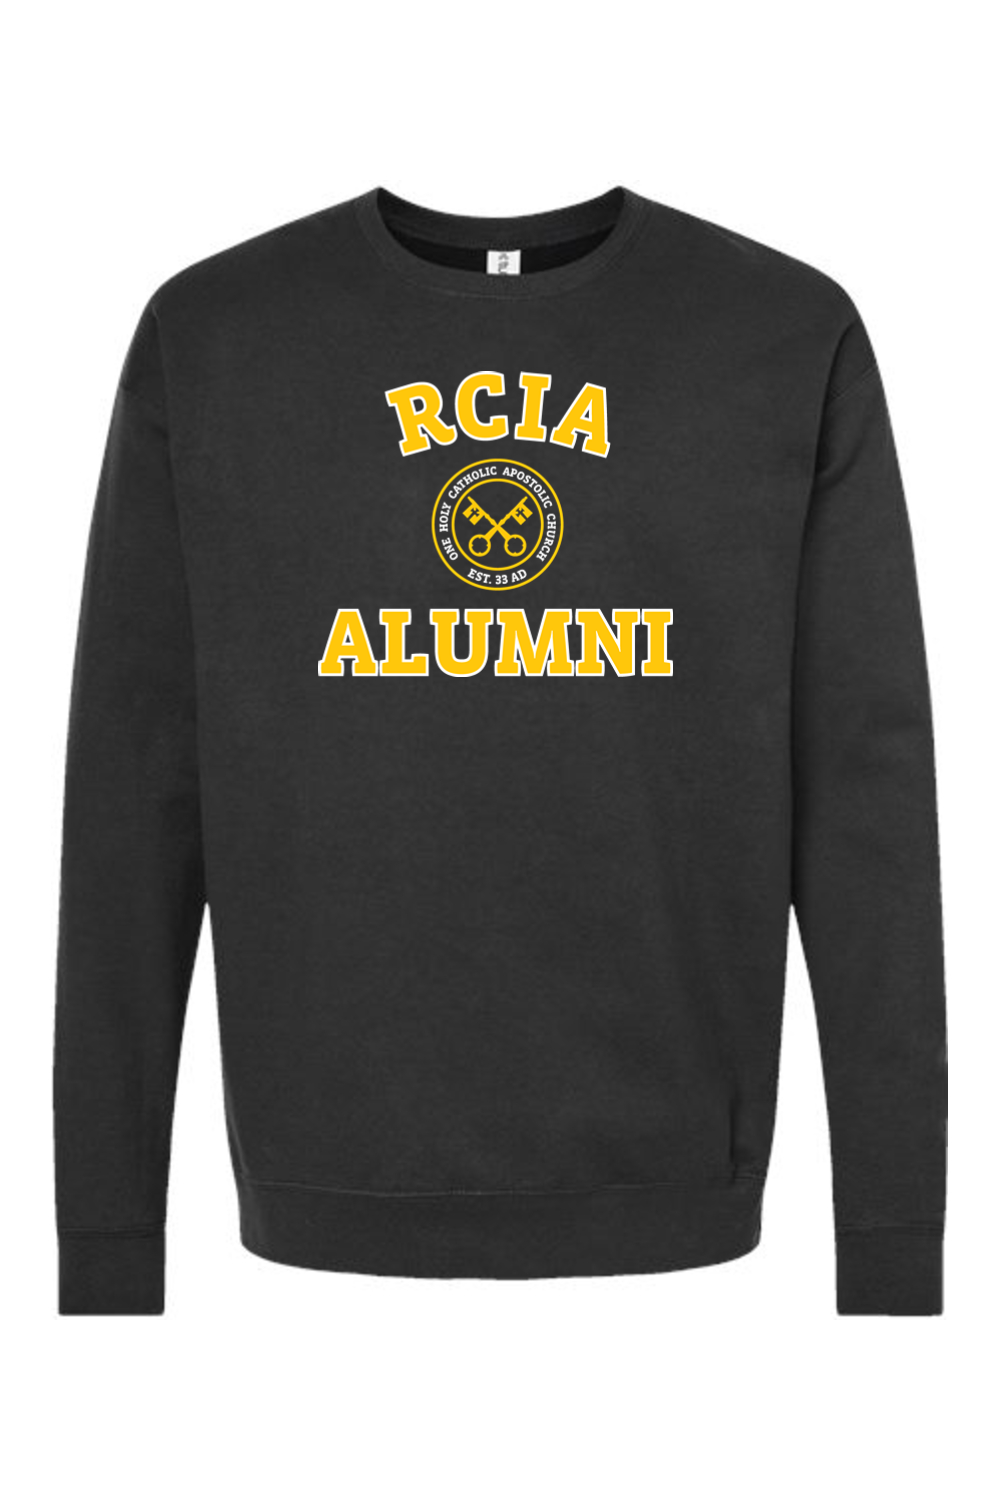 RCIA Alumni - Crewneck Sweatshirt